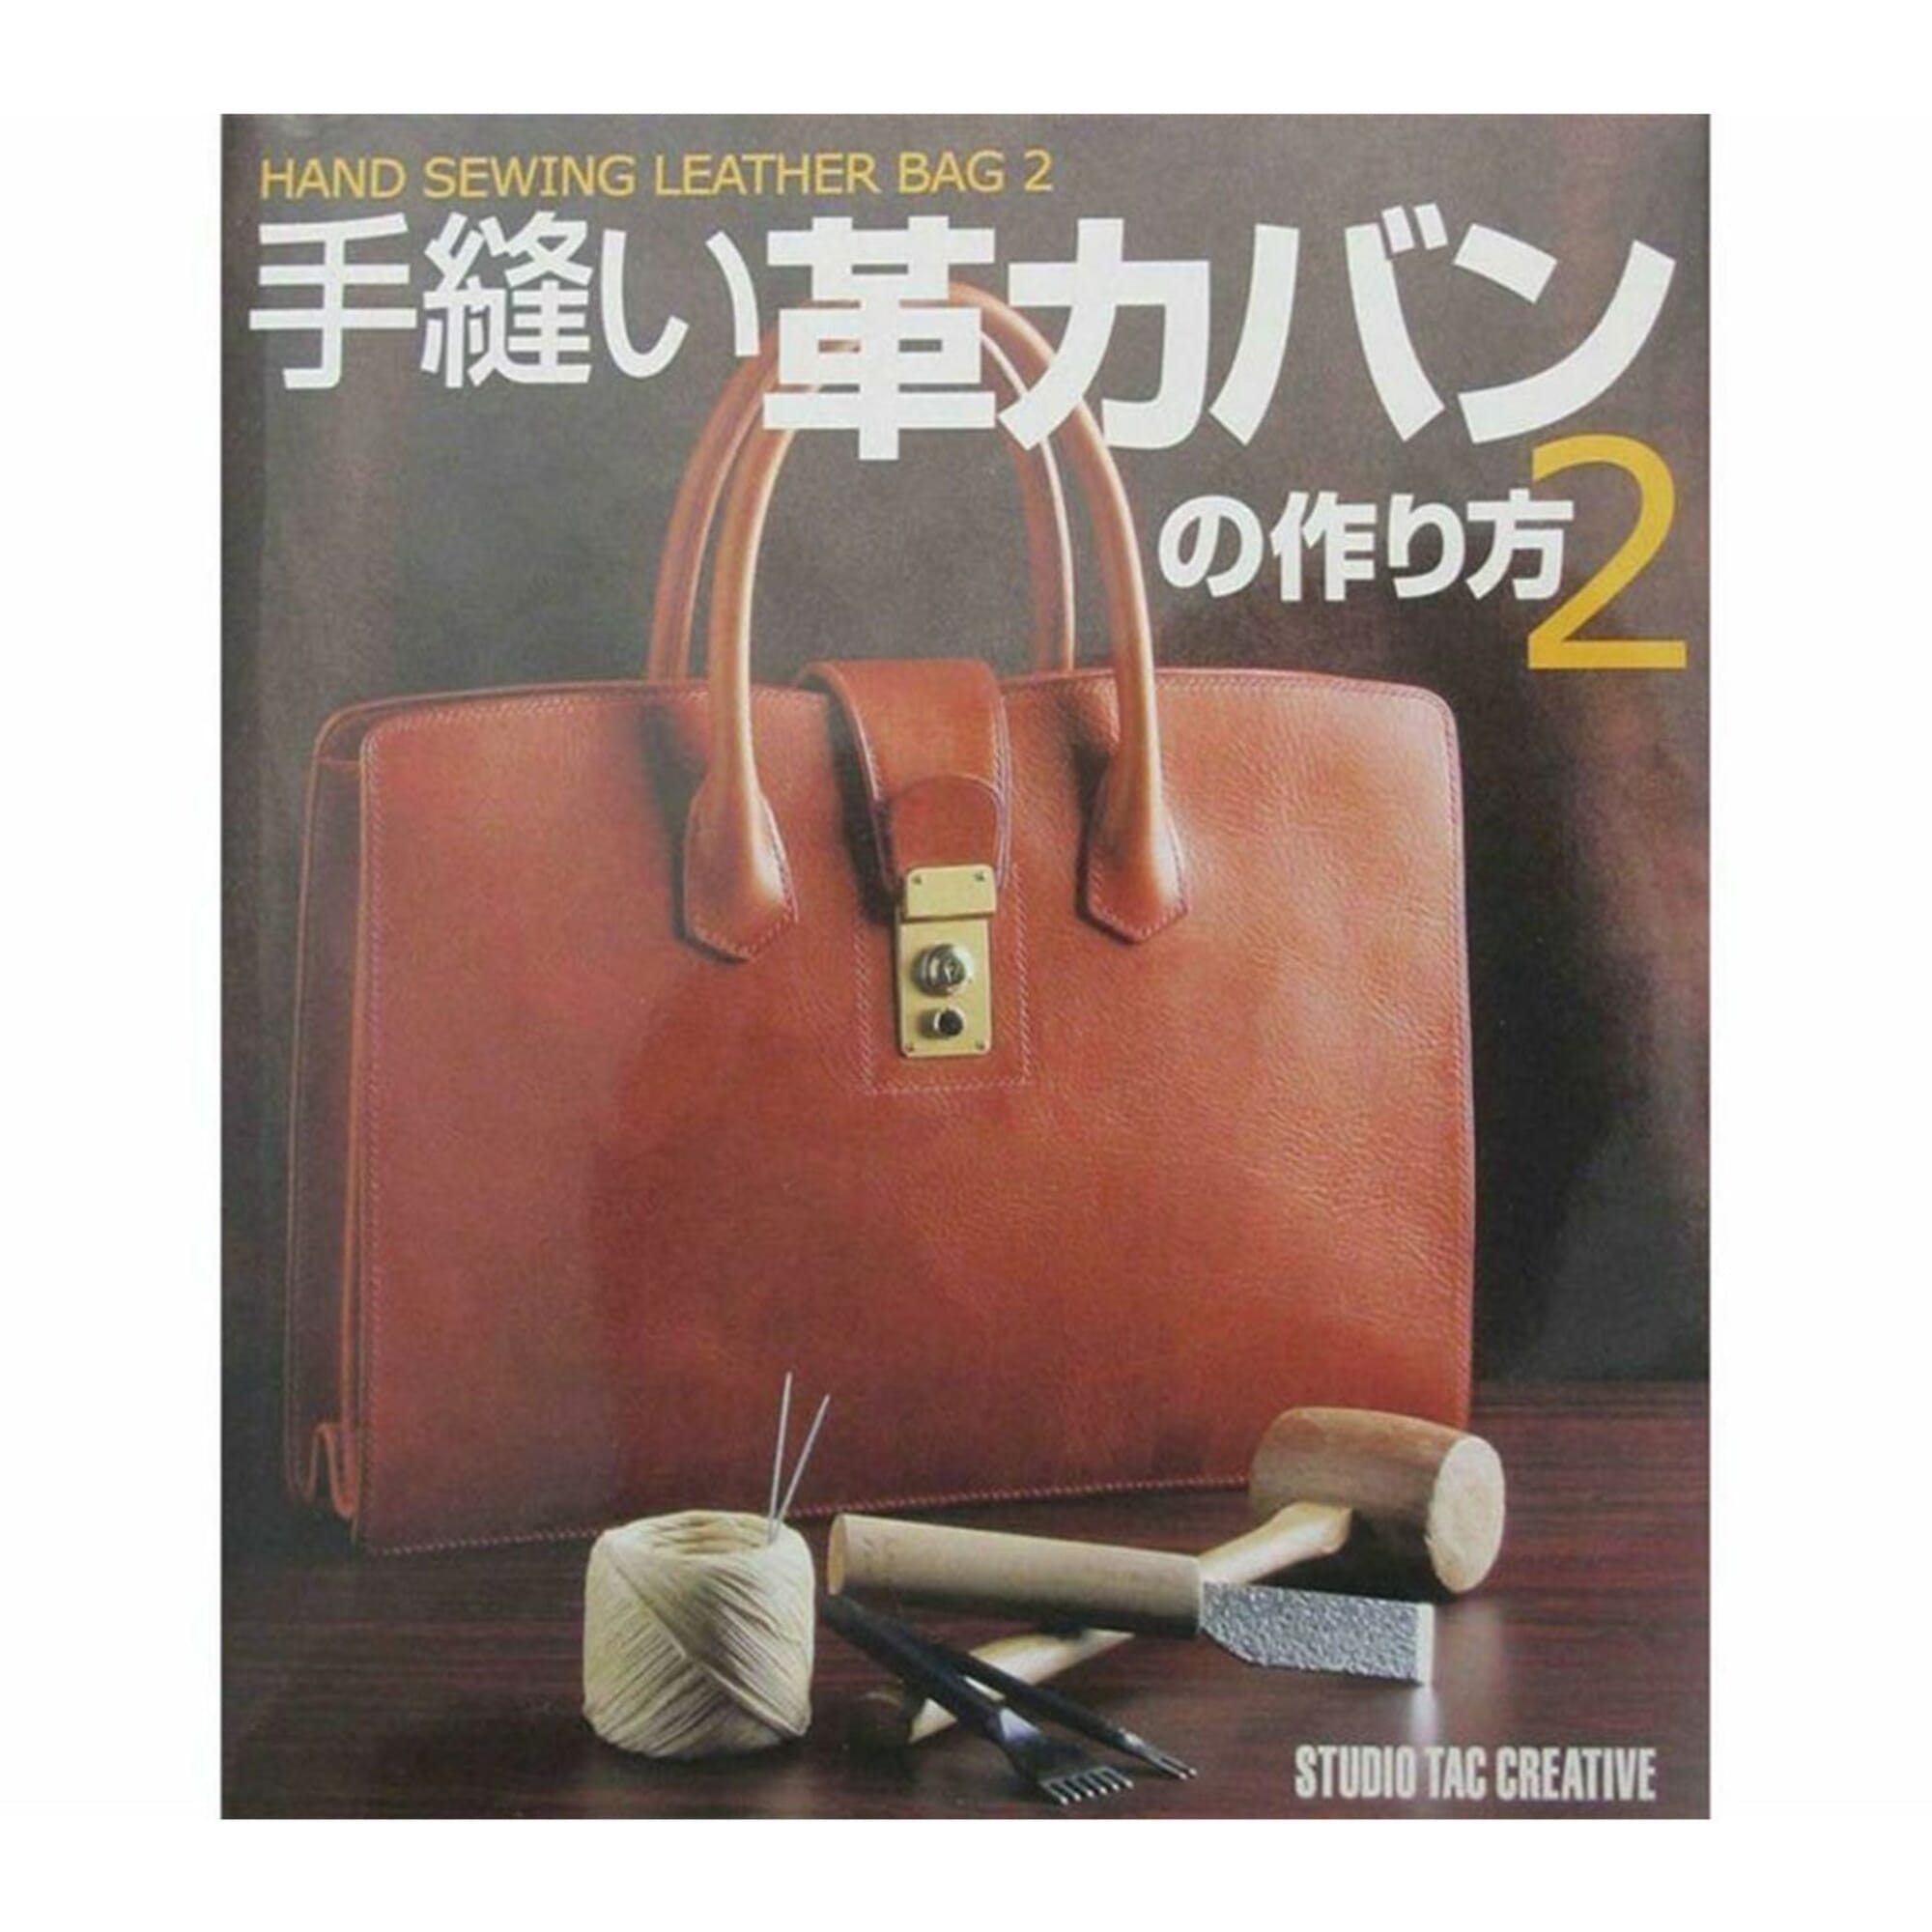 How to make finished bag's leather shiny? : r/Leathercraft